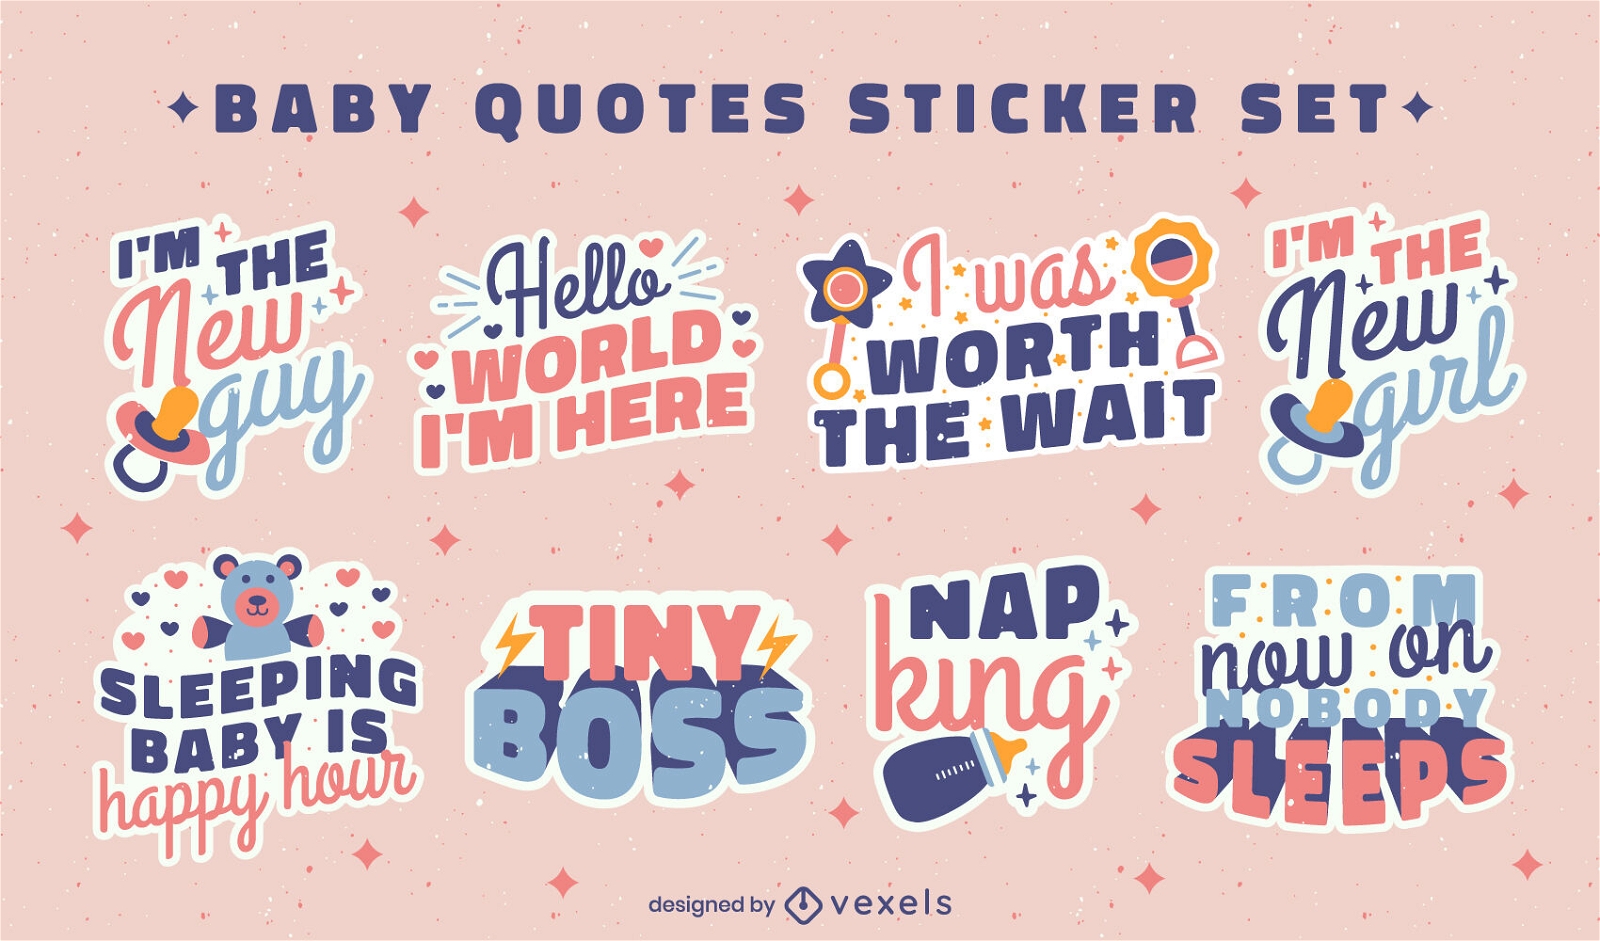 Baby quotes sticker set